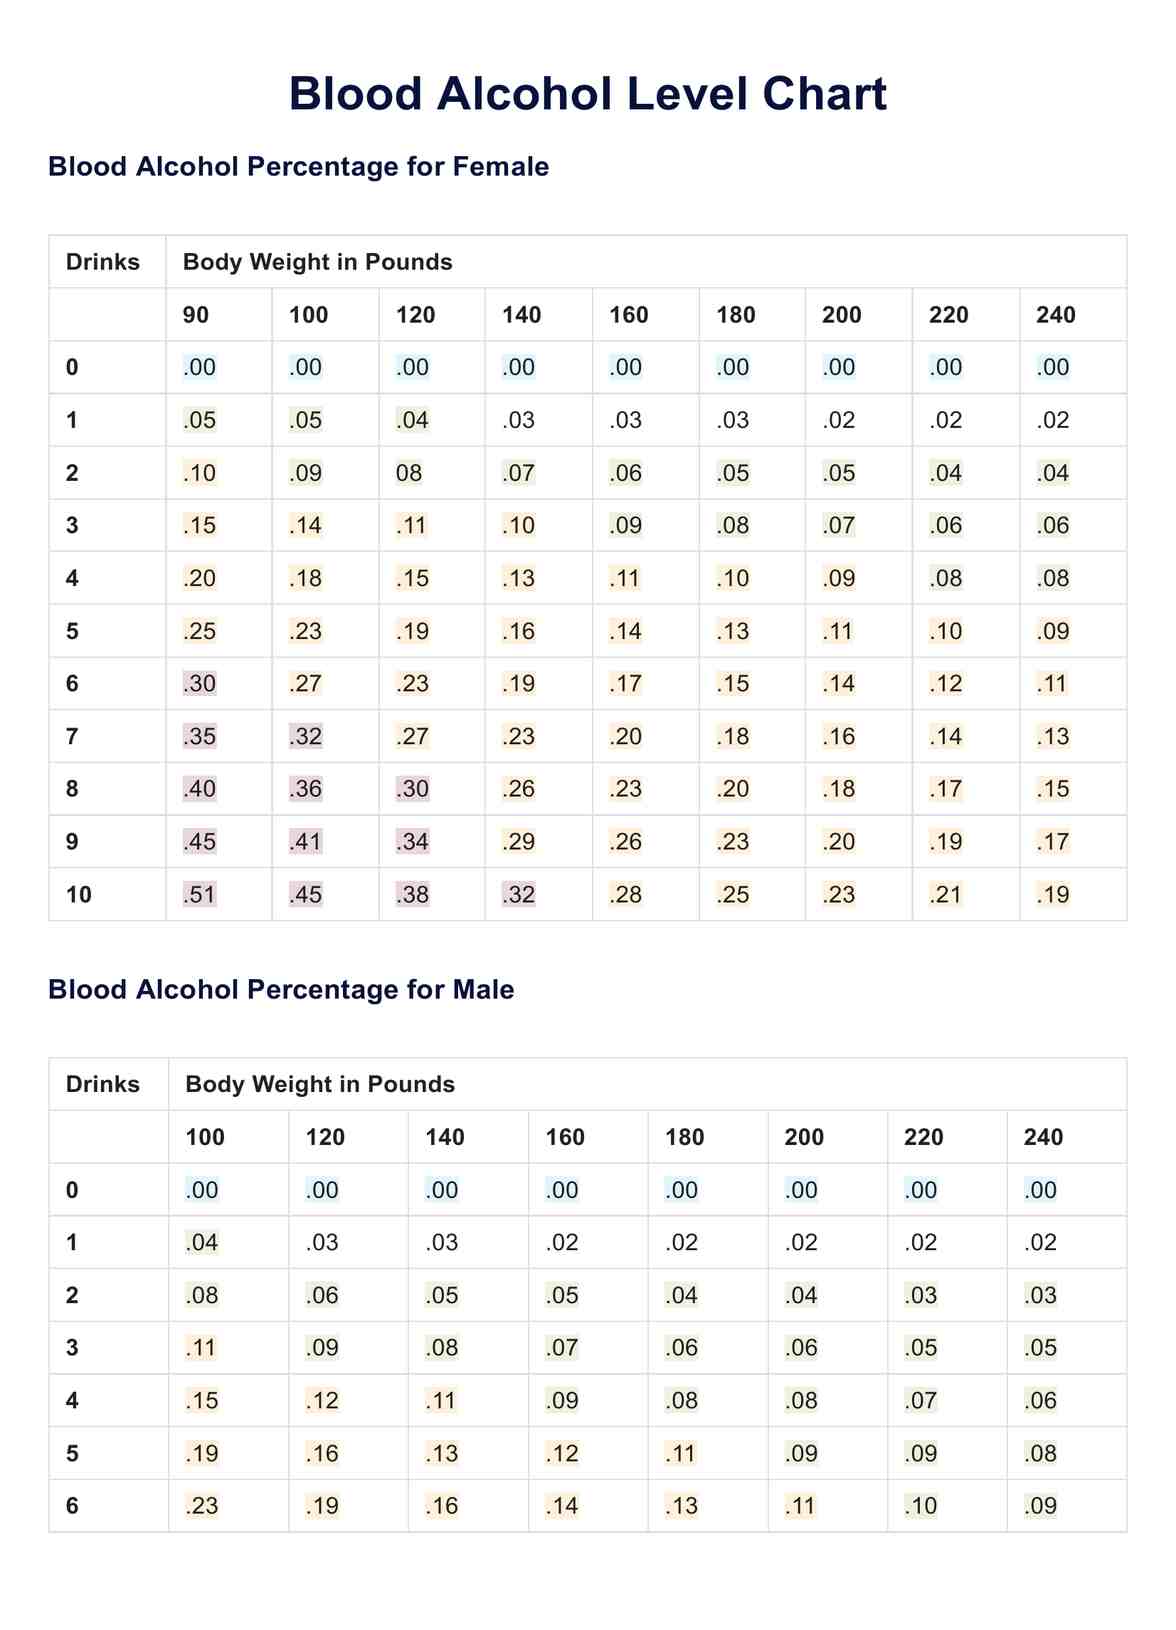 Blood Alcohol Level Chart PDF Example